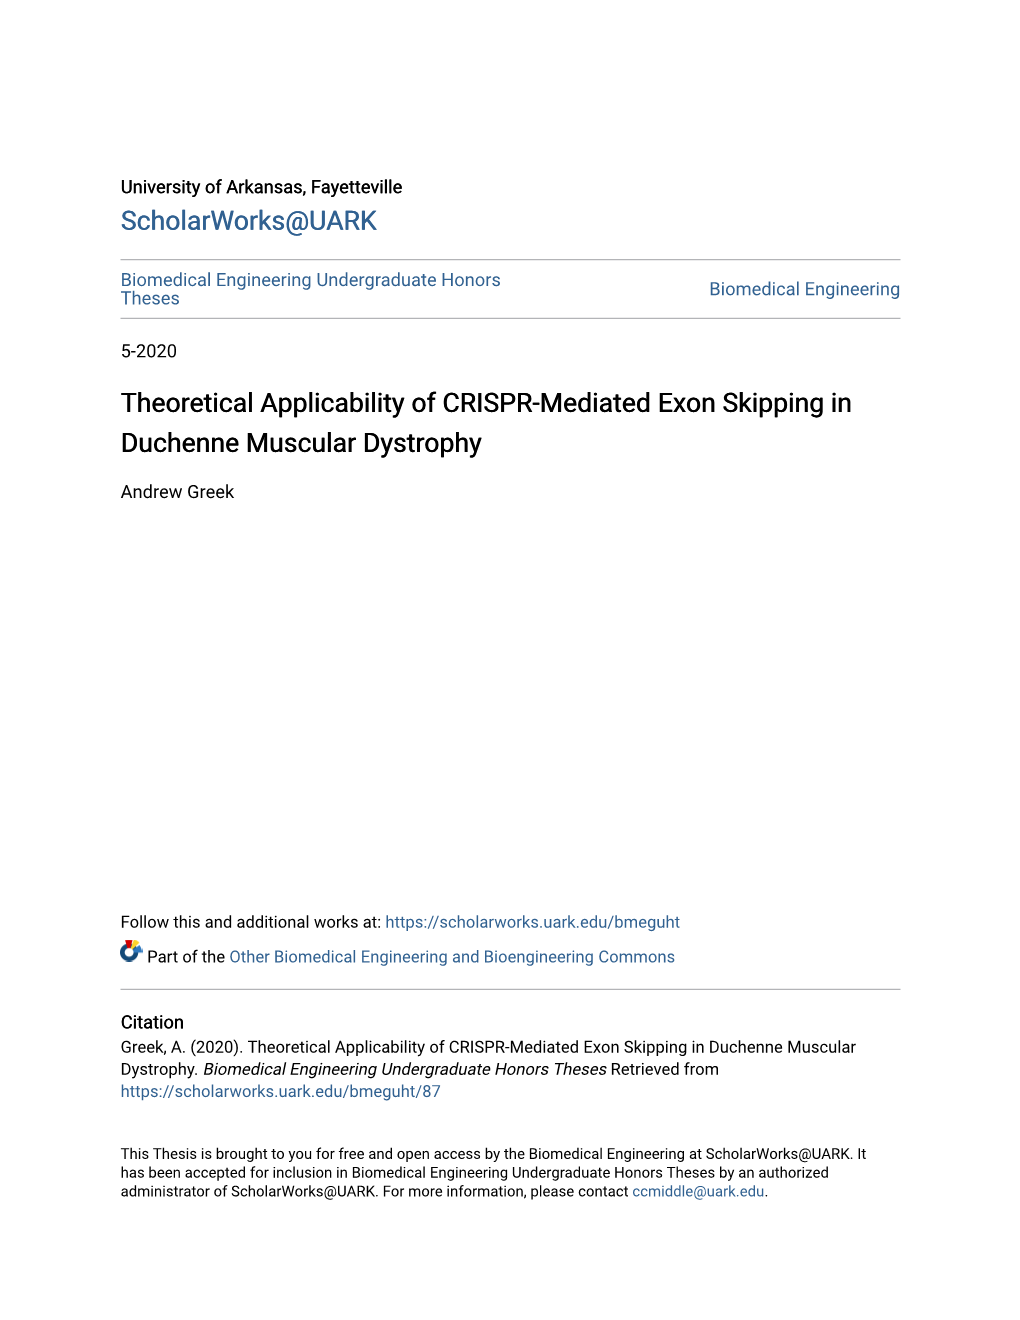 Theoretical Applicability of CRISPR-Mediated Exon Skipping in Duchenne Muscular Dystrophy